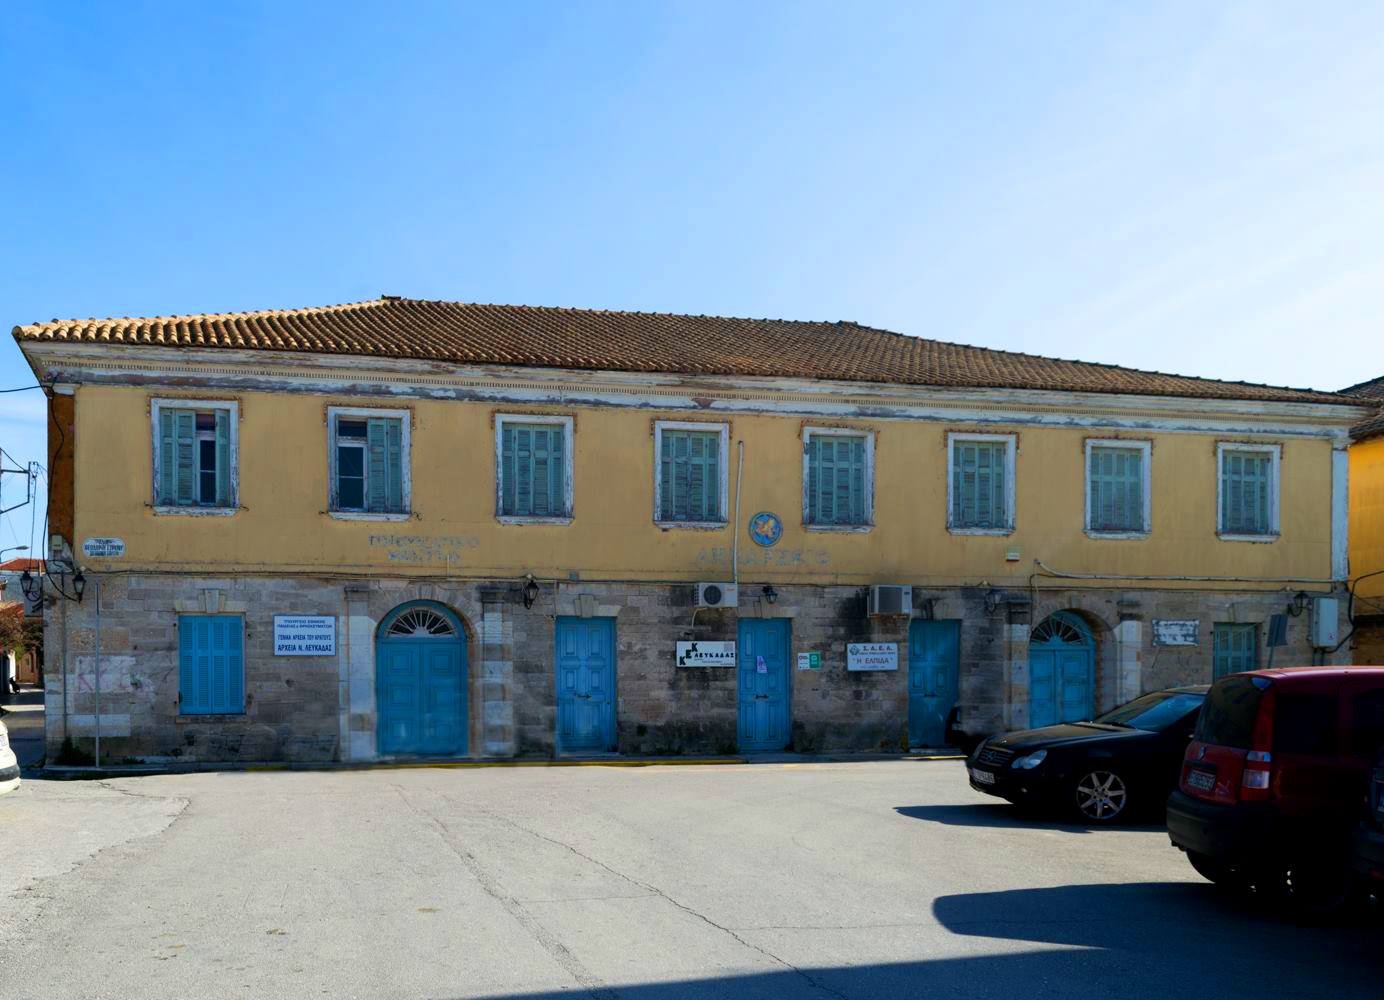 Lefkada archives | Old building in Lefkada town | Architecture